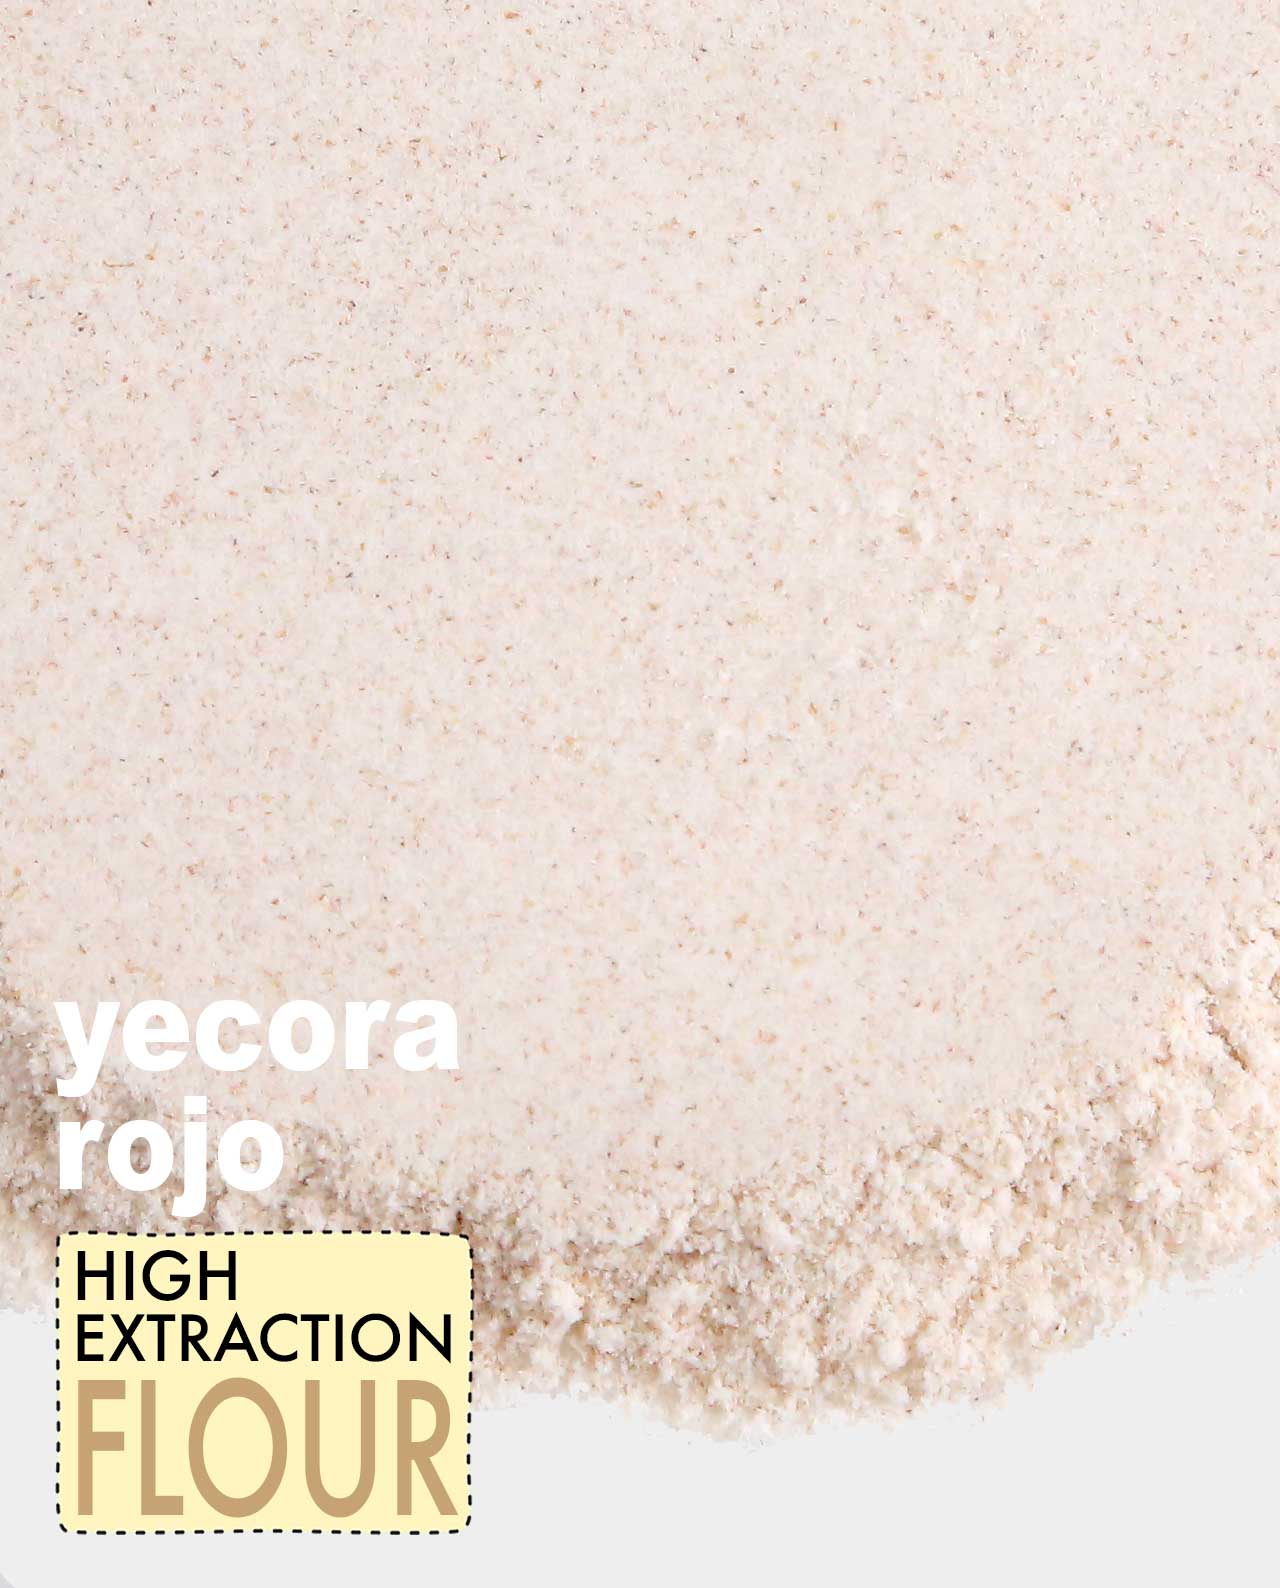 Yecora Rojo High Extraction Flour